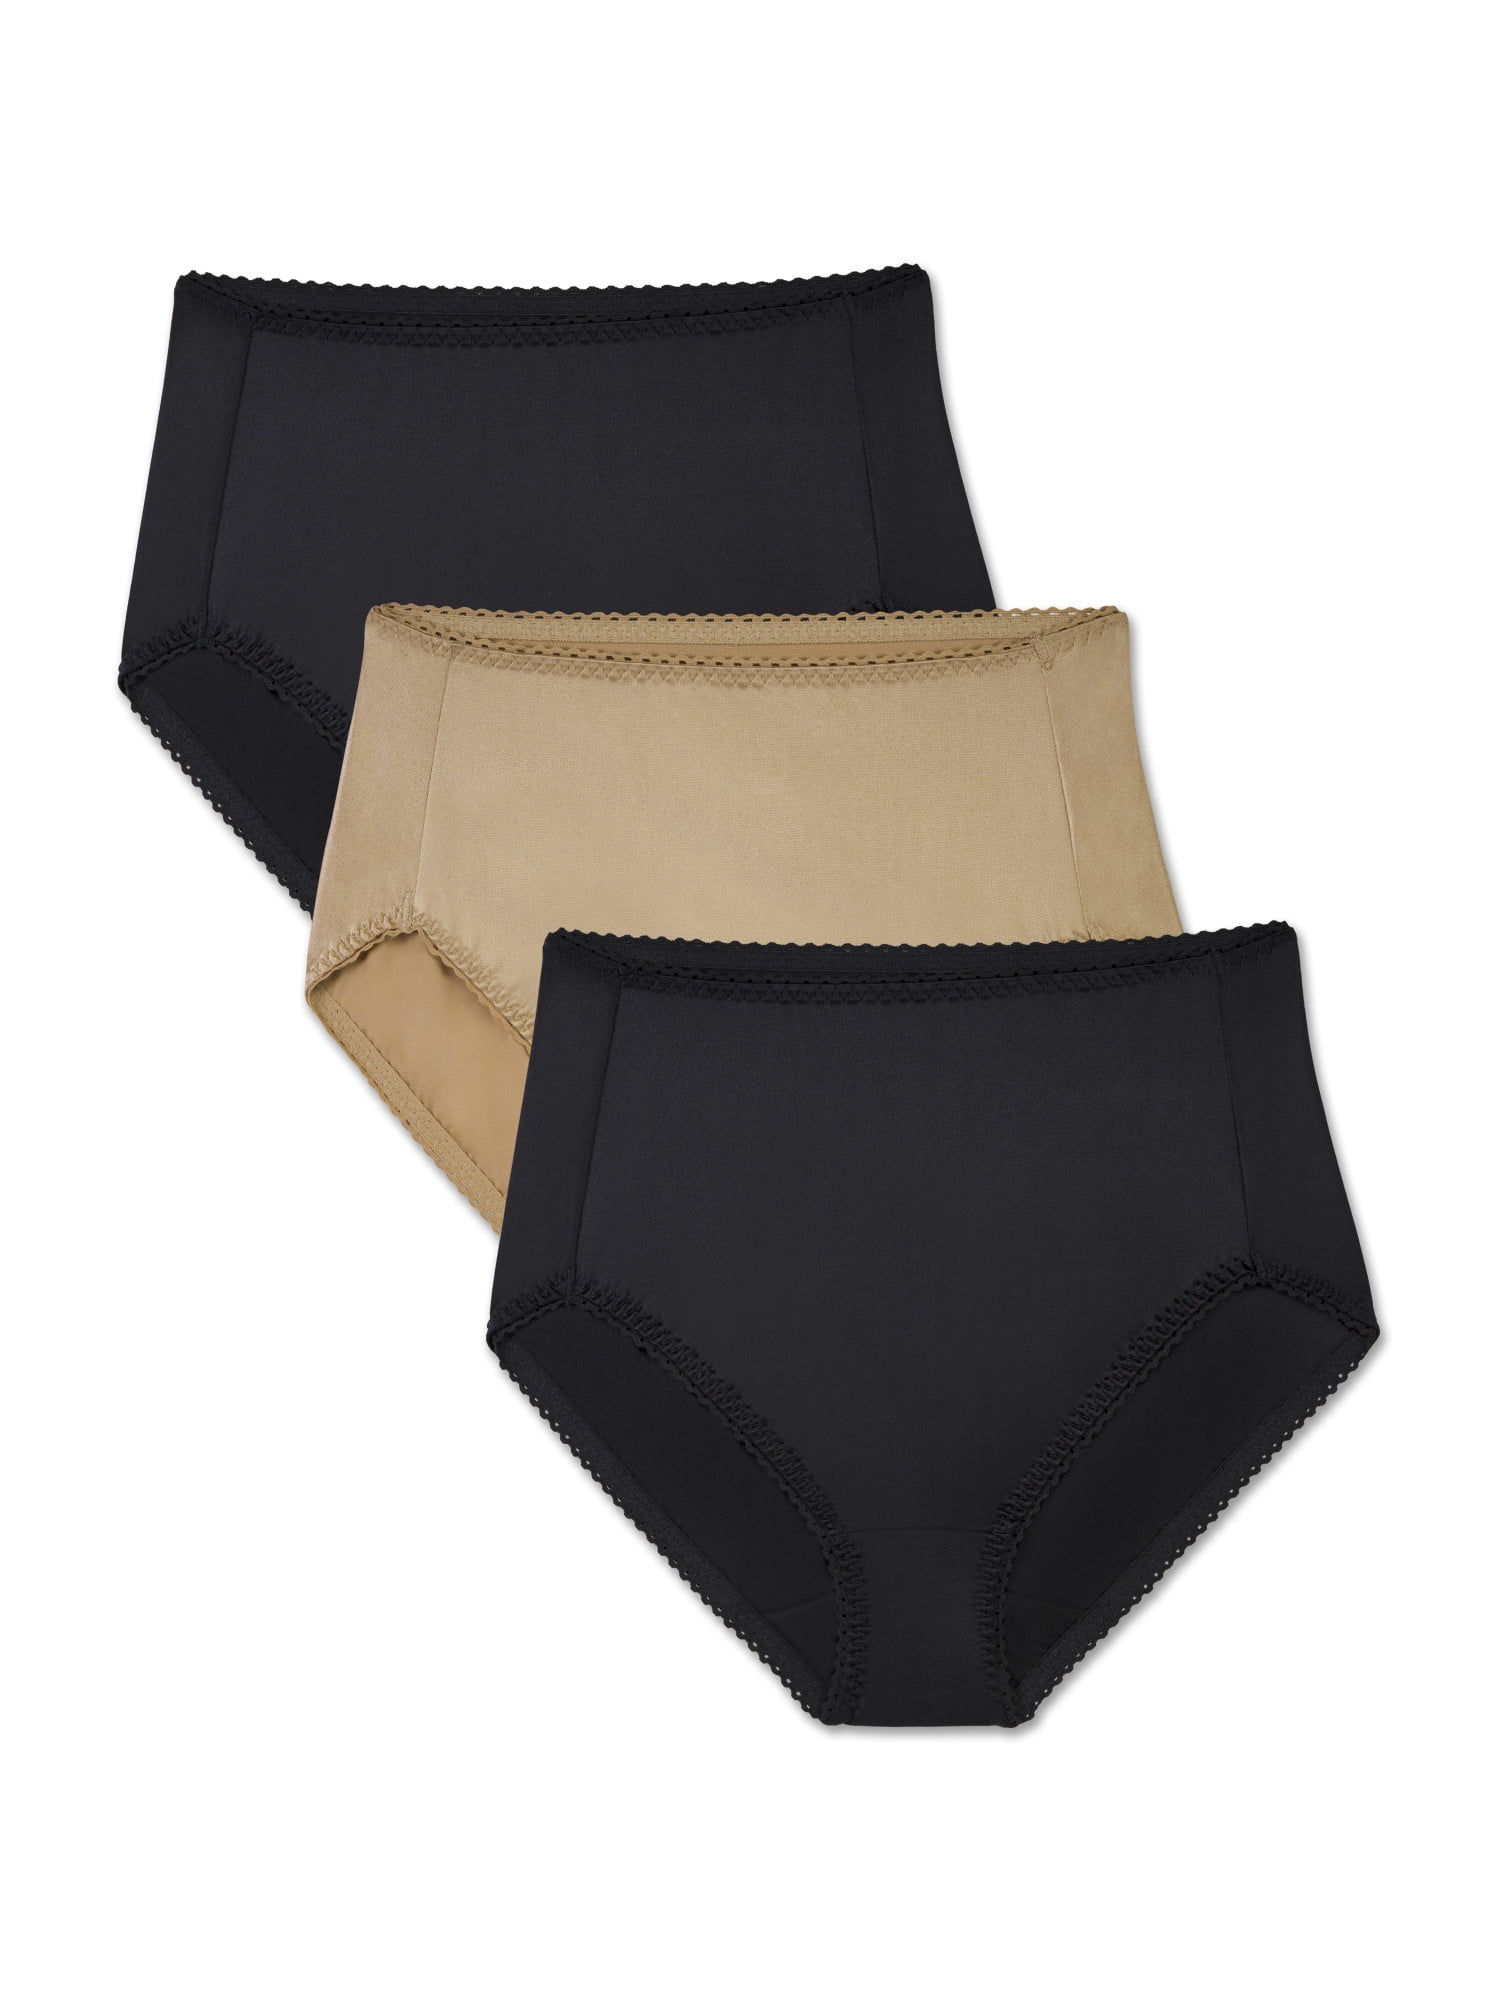 Women's ComfortBlend Hi-Cut Underwear 4 Pack 